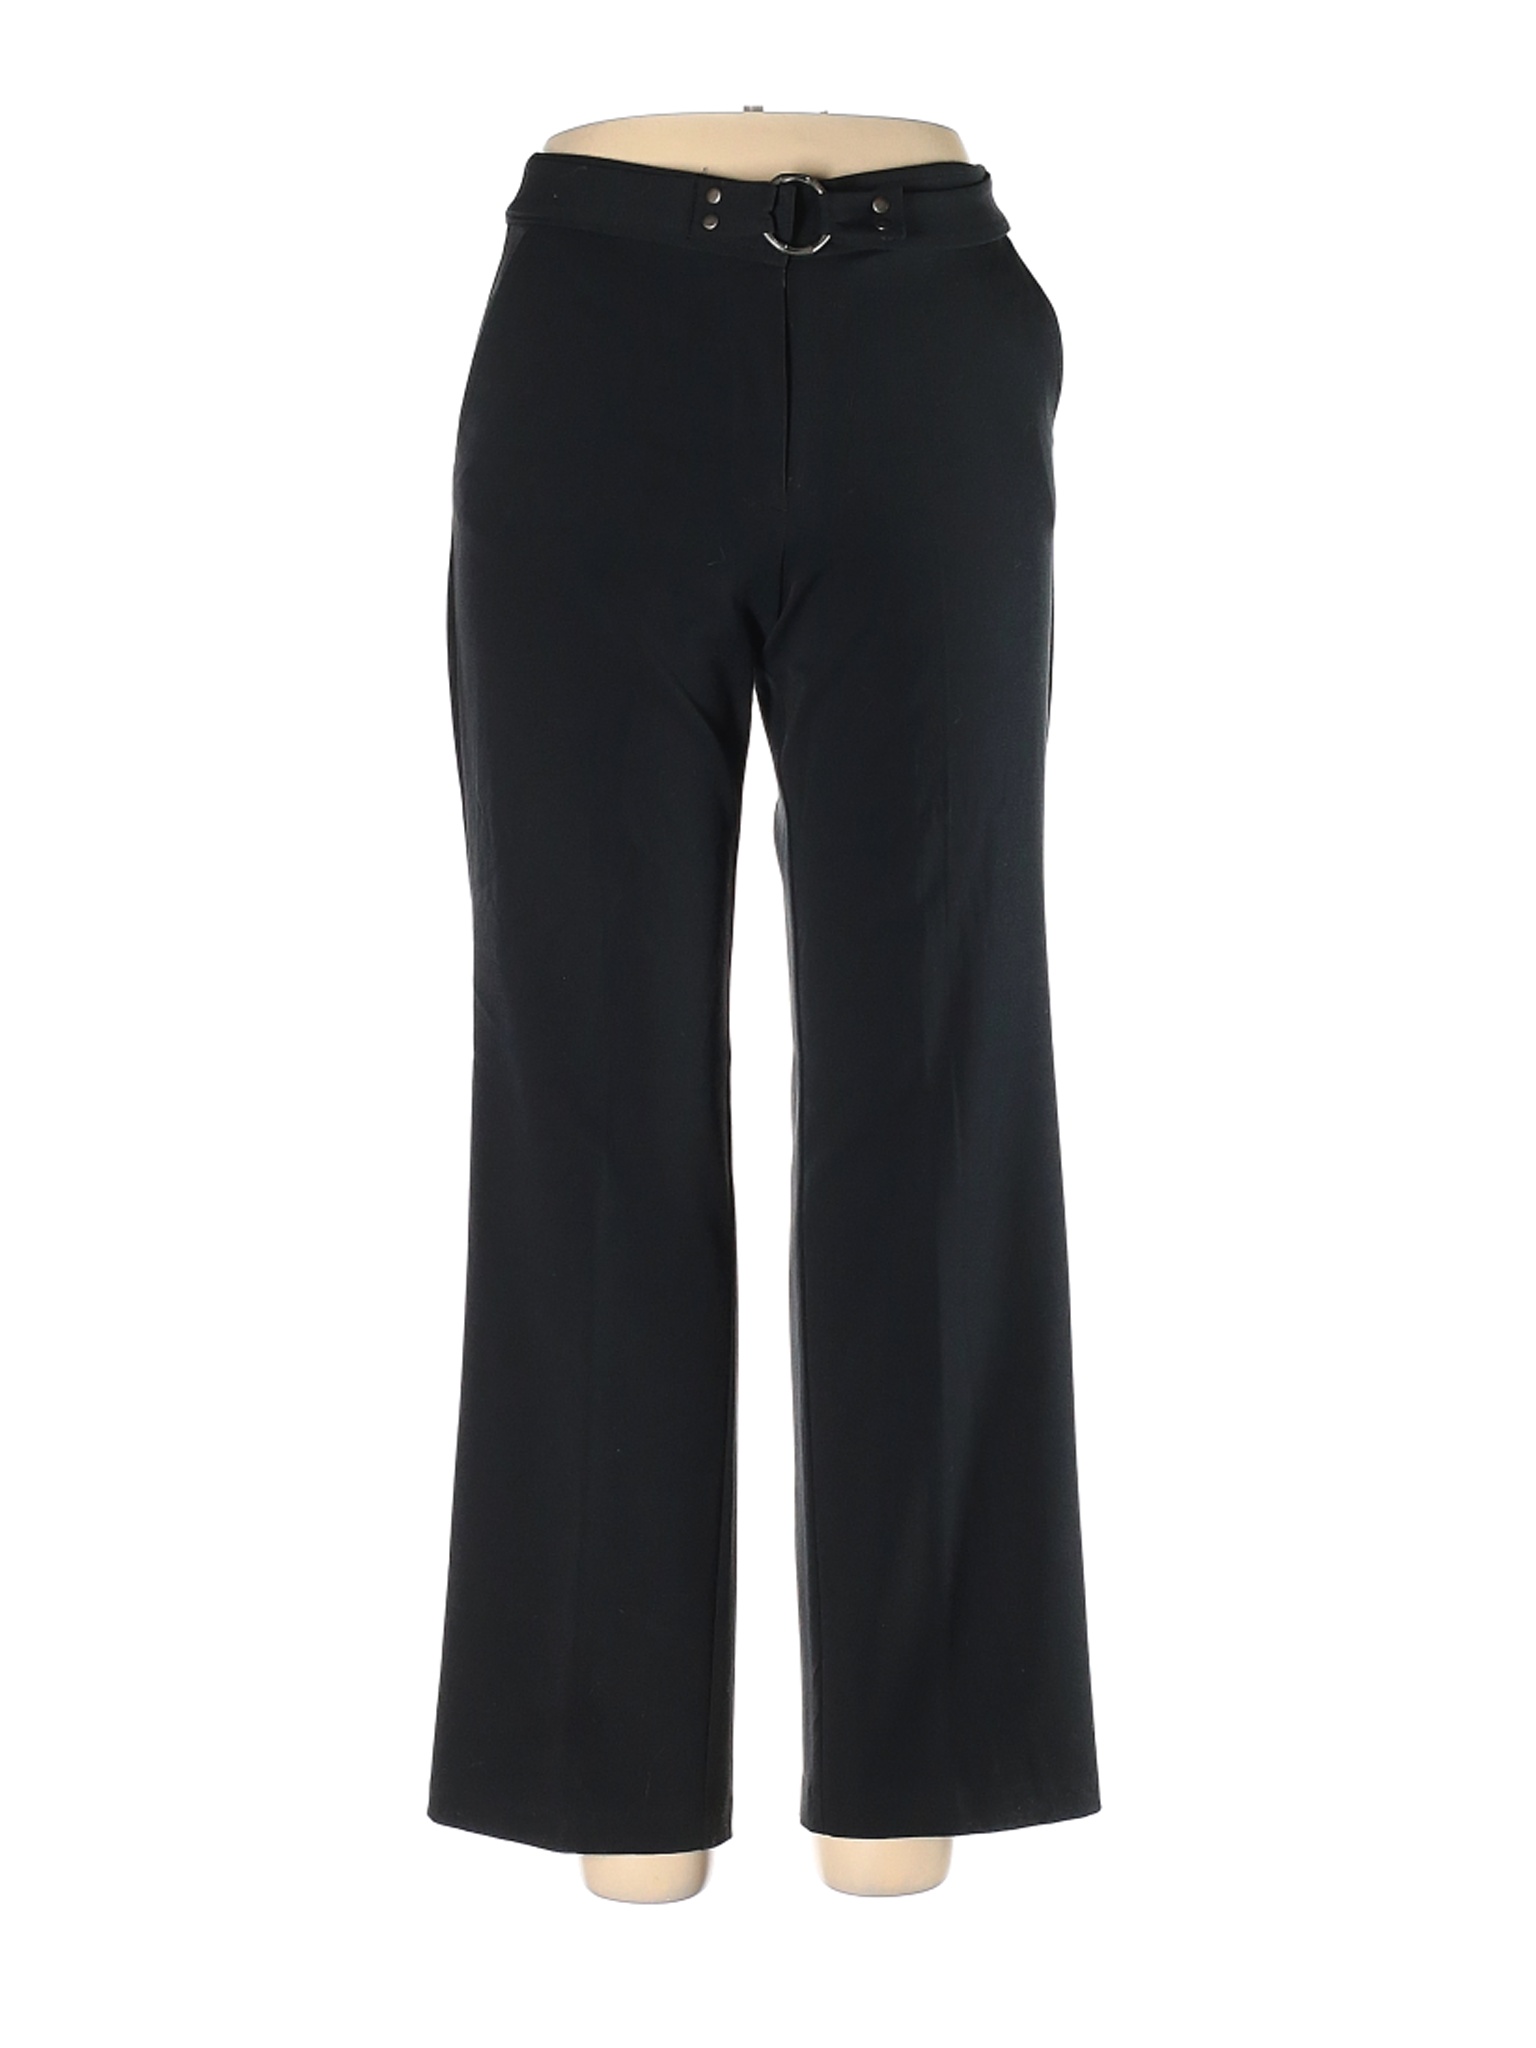 JM Collection Women Black Dress Pants 6 Petites | eBay